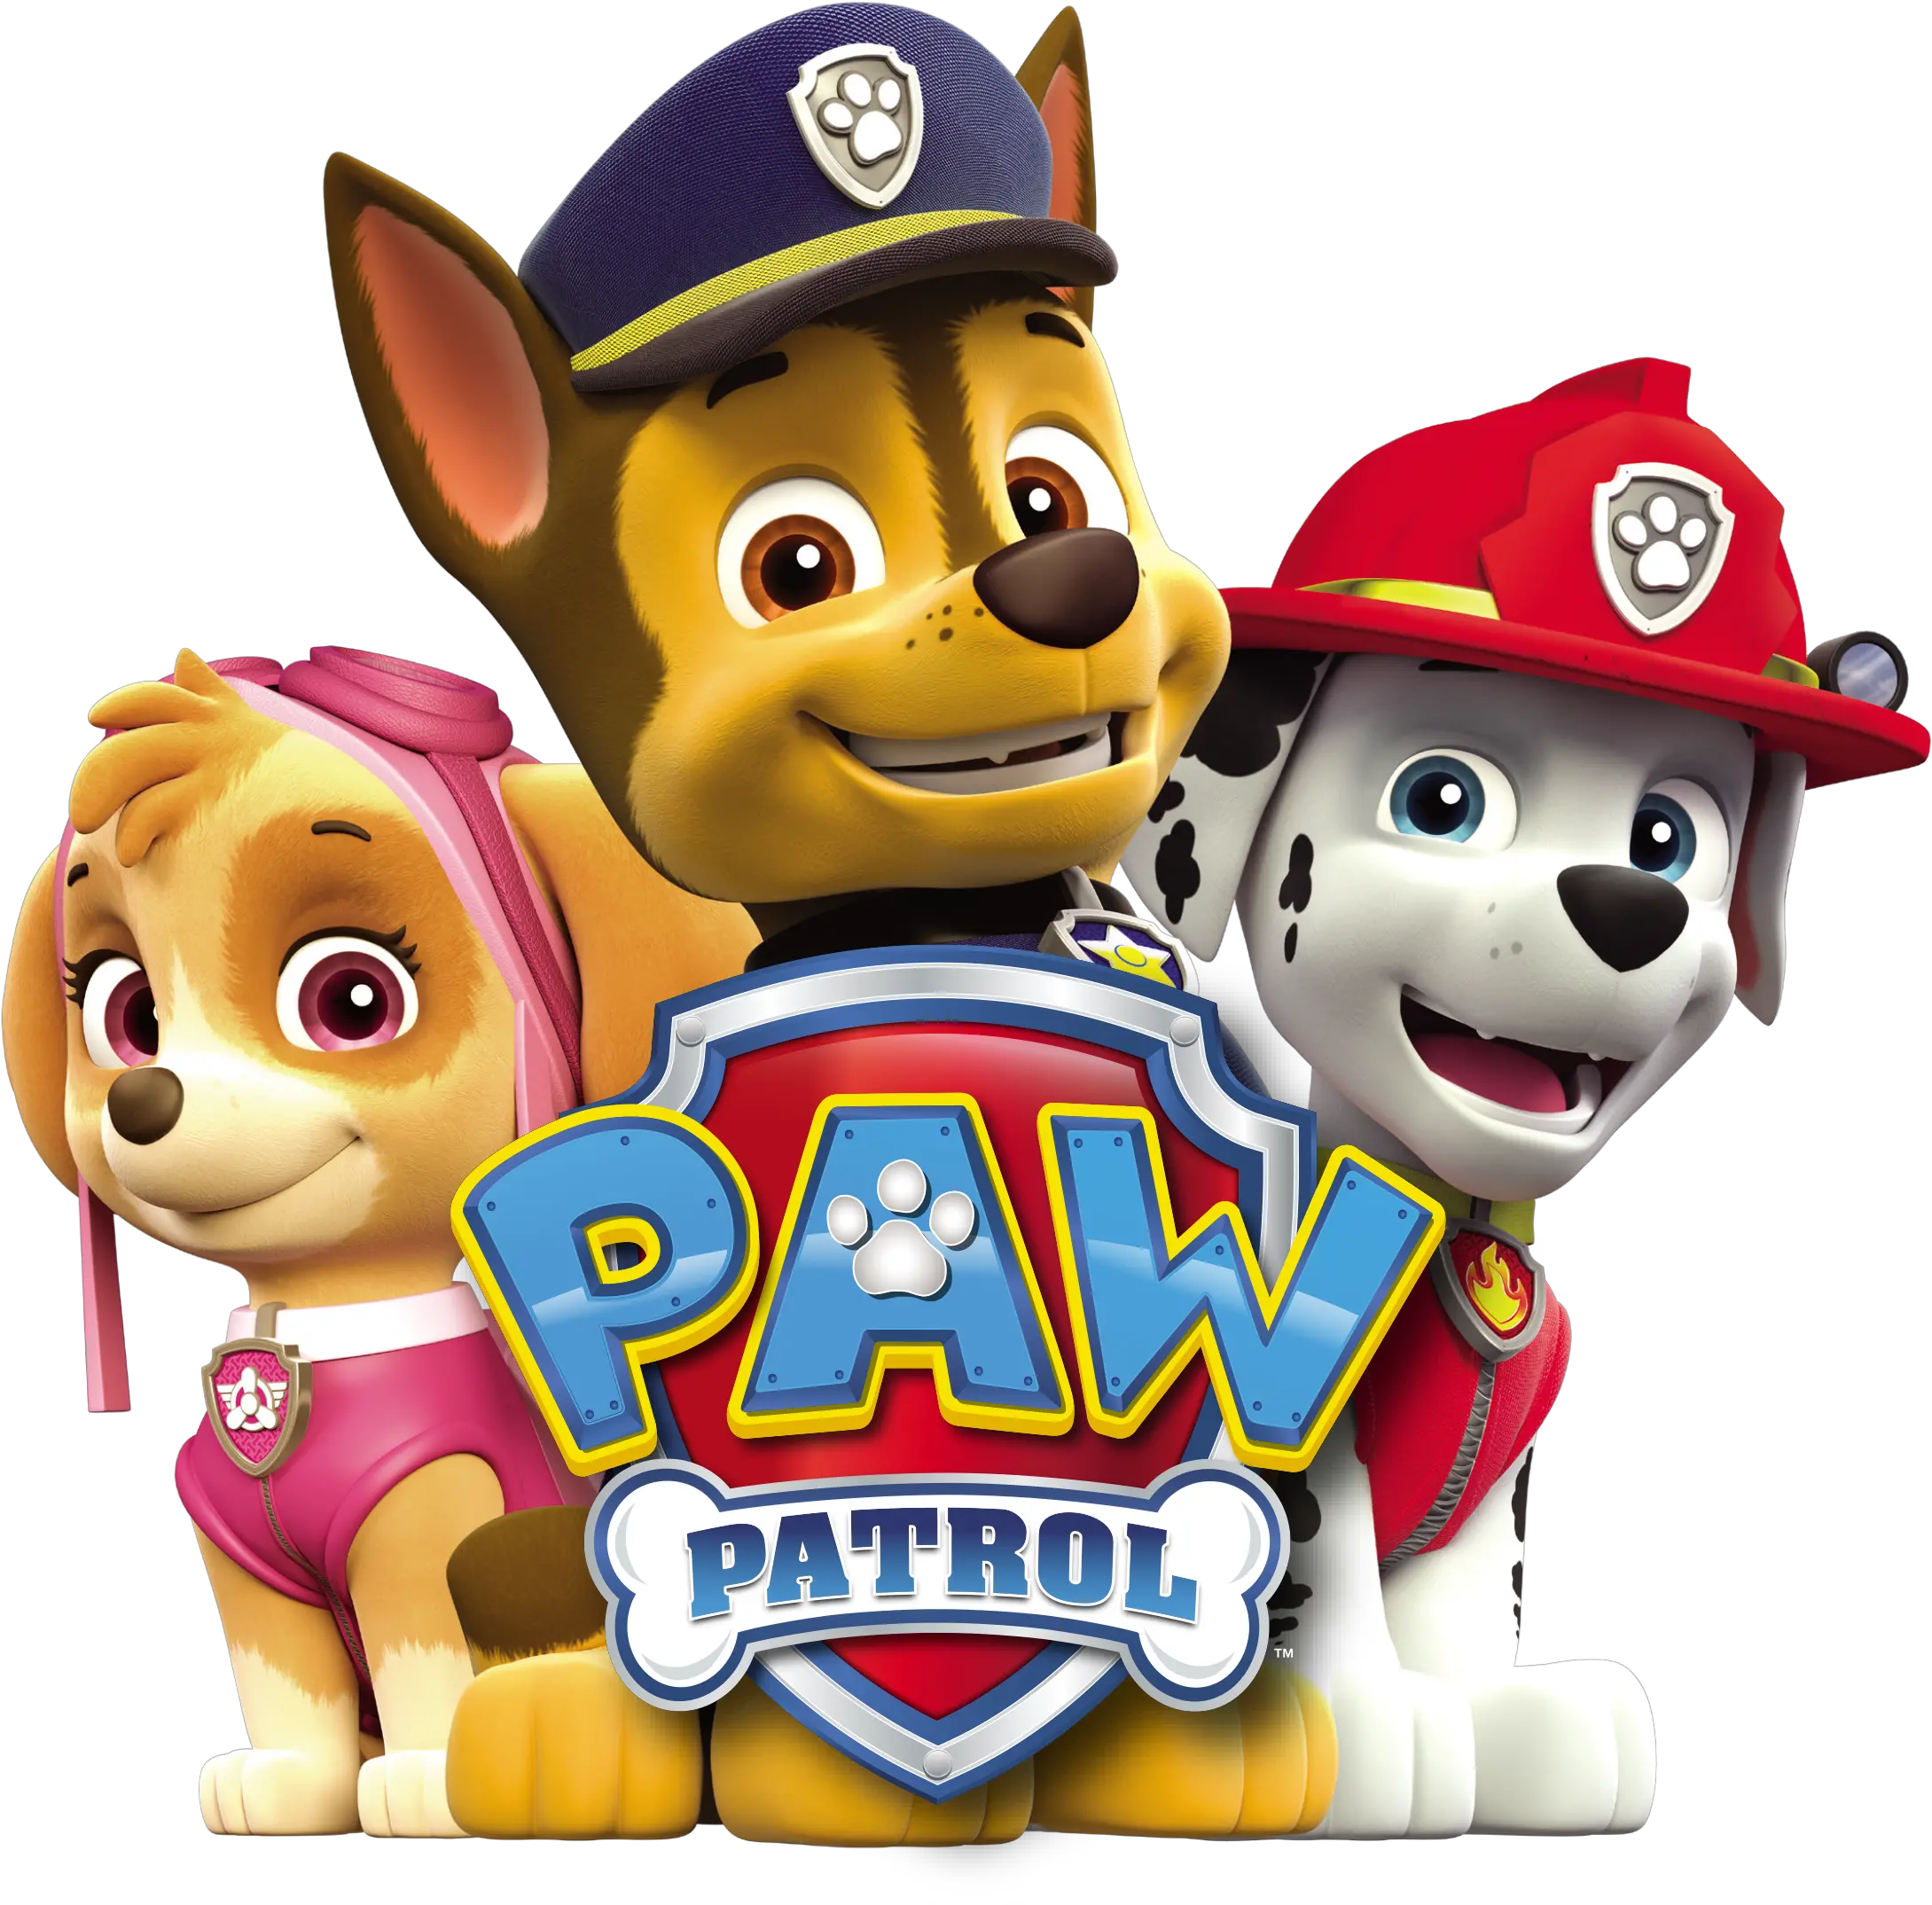 Paw Patrol Png Chase Paw Patrol 002 Paw Patrol Hd Png Paw Patrol Imagenes Hd Paw Patrol Png